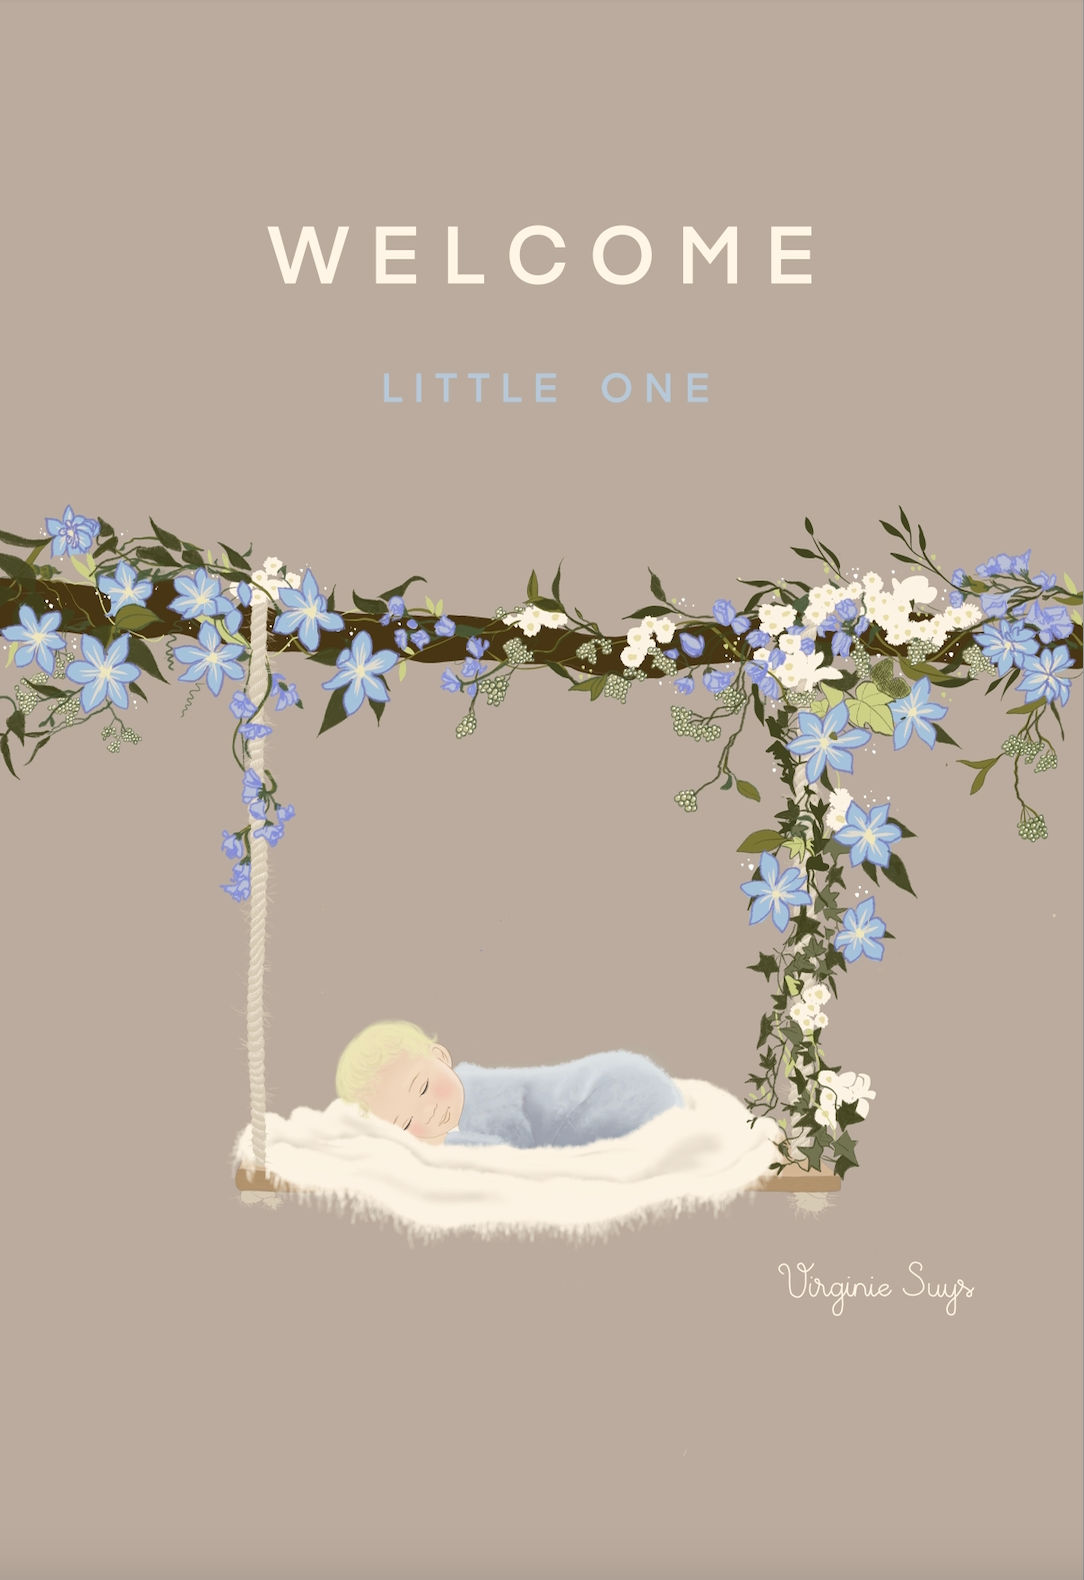 Wishcard - welcome, little one - blue